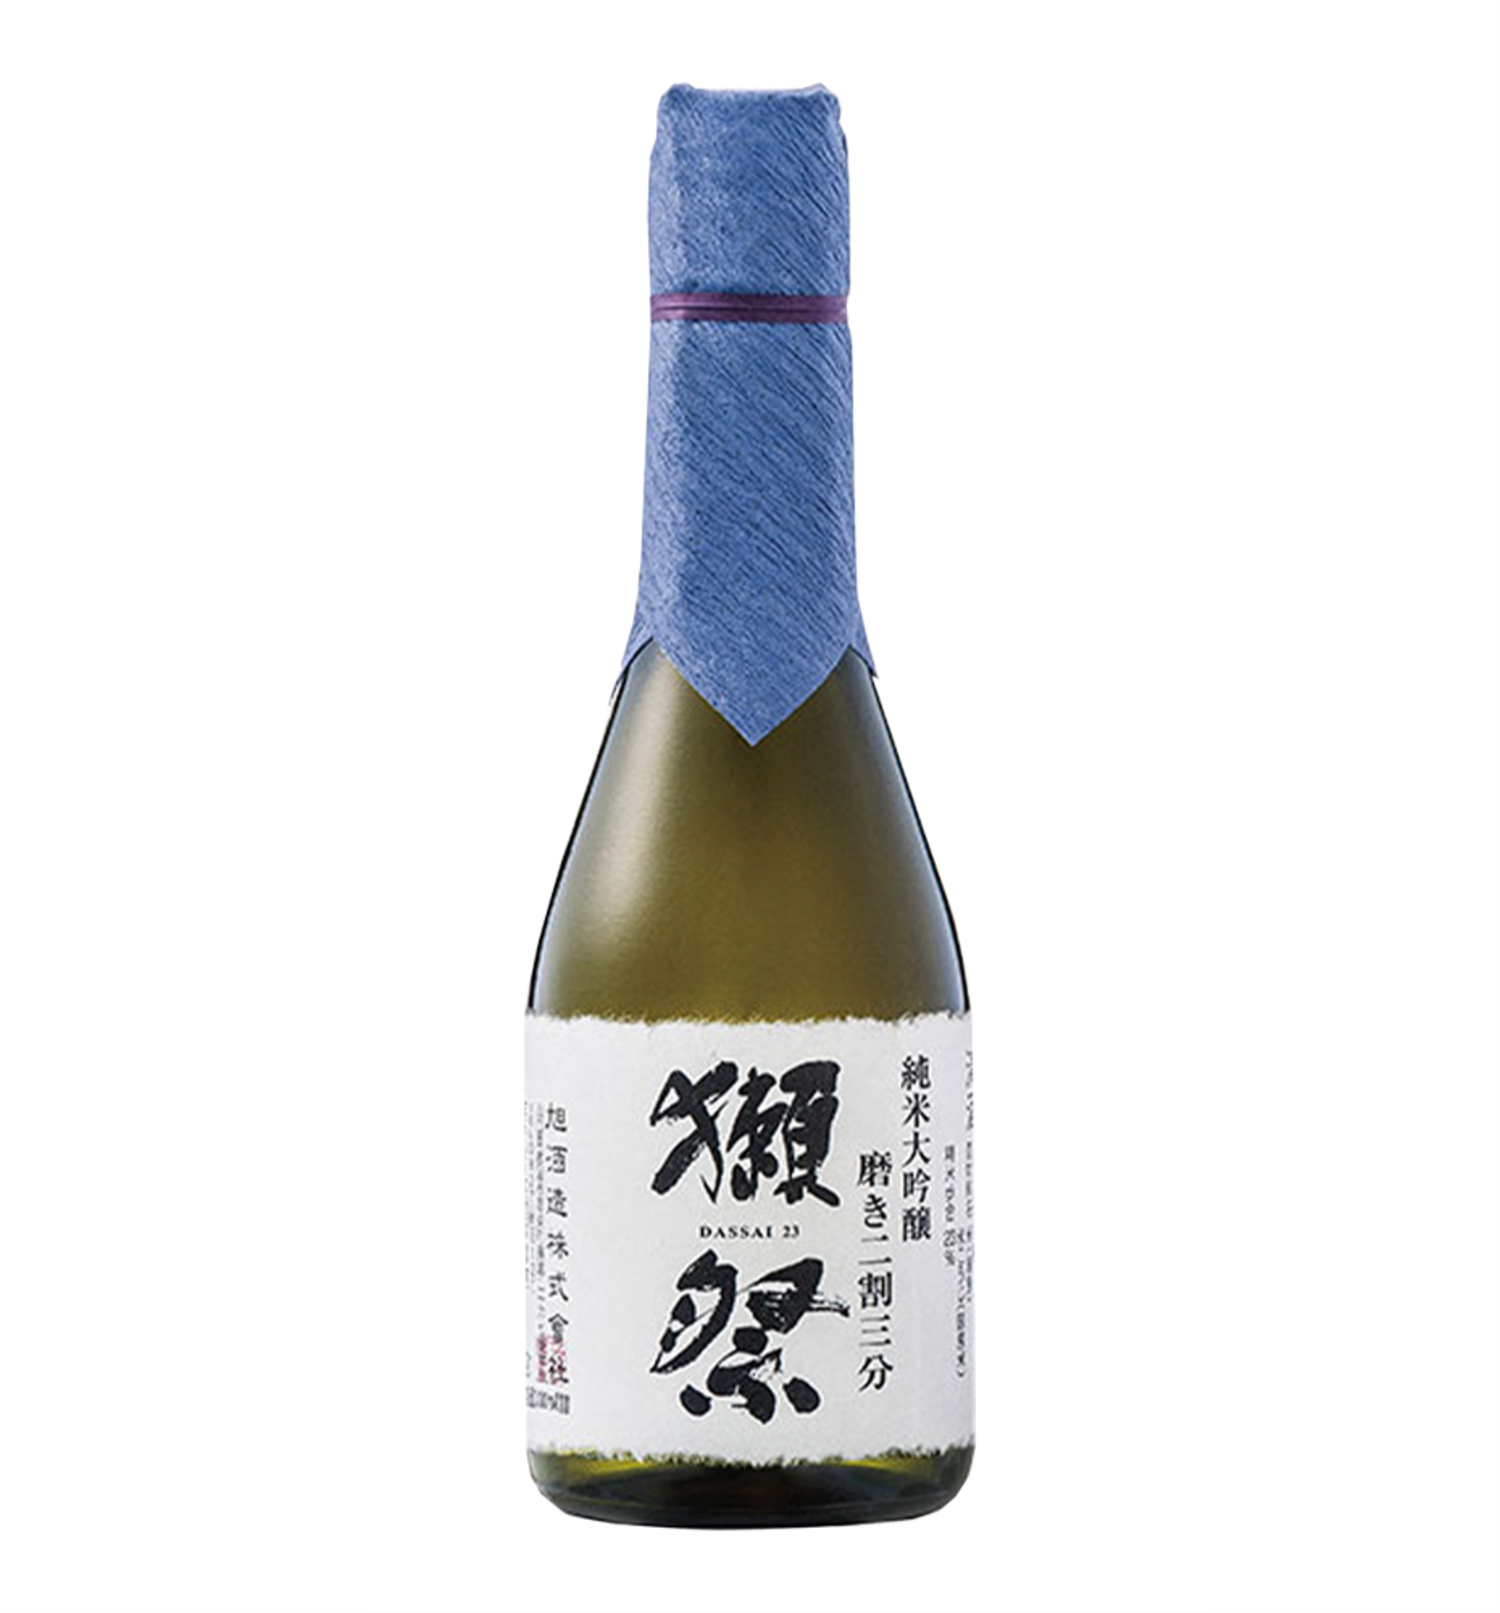 Dassai 23 Junmai Daiginjo Sake 獭祭纯米大吟釀300ml $39 - Uncle